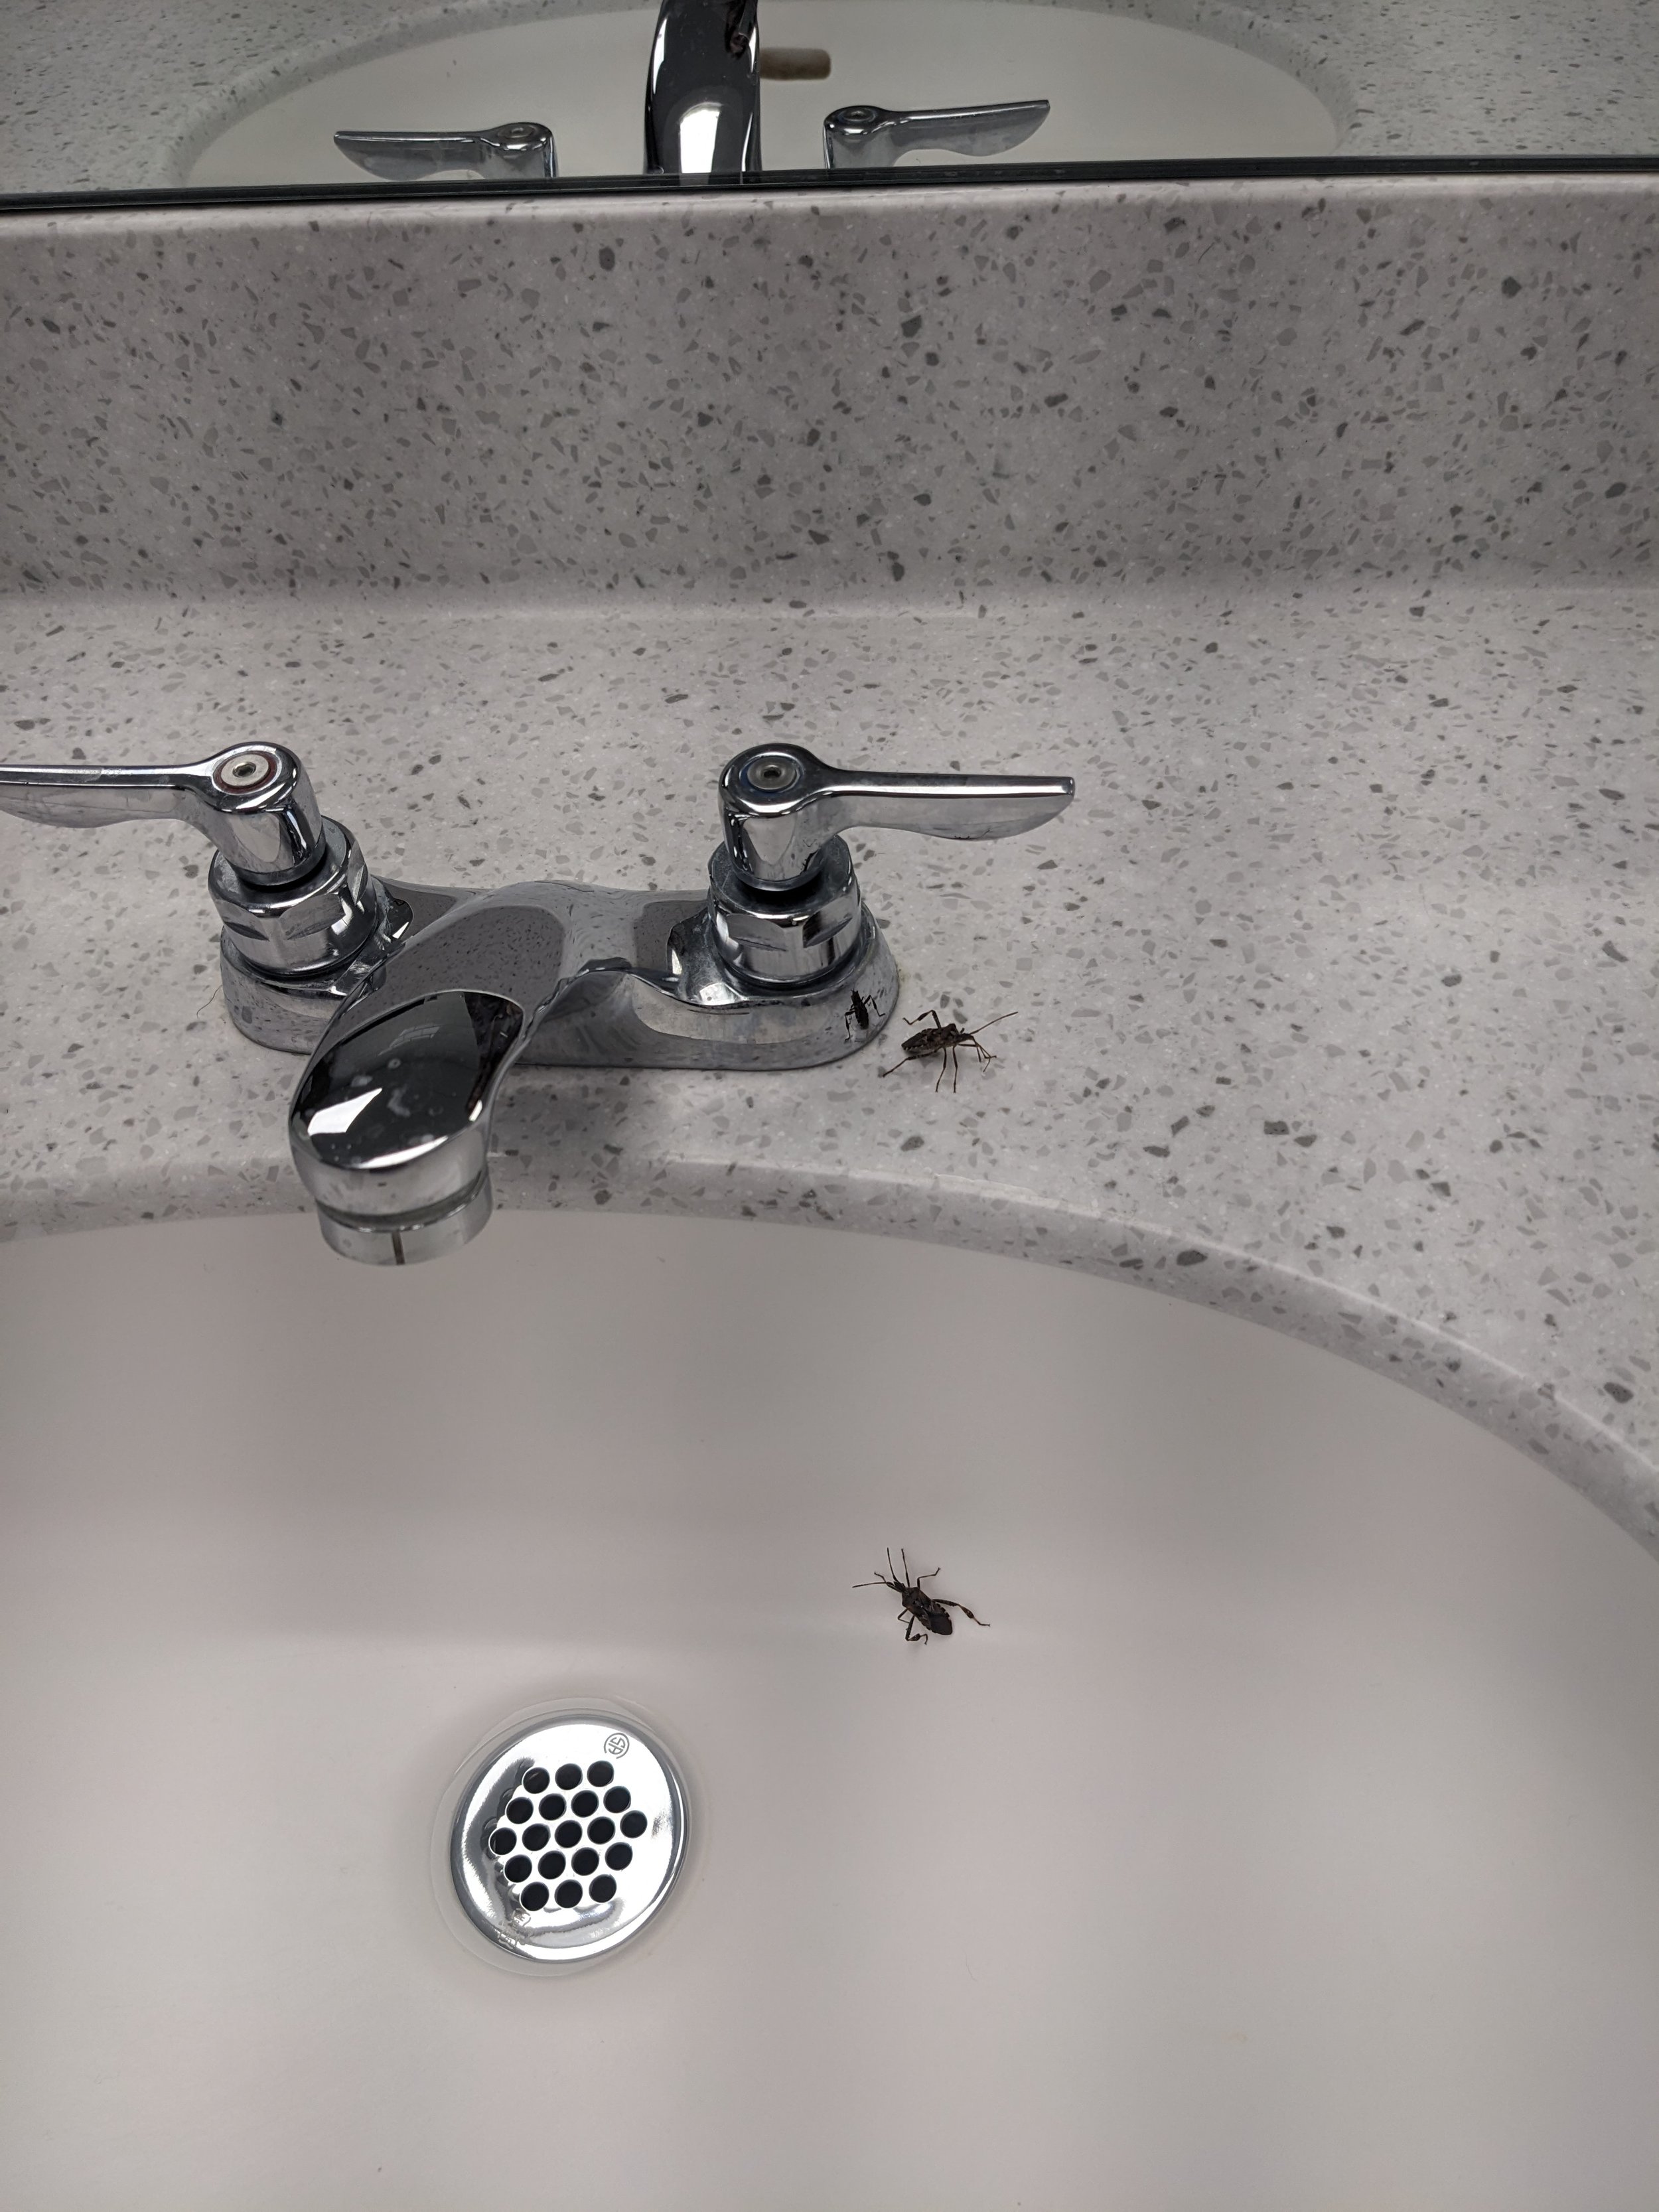 Stink bugs in bathroom_.jpg